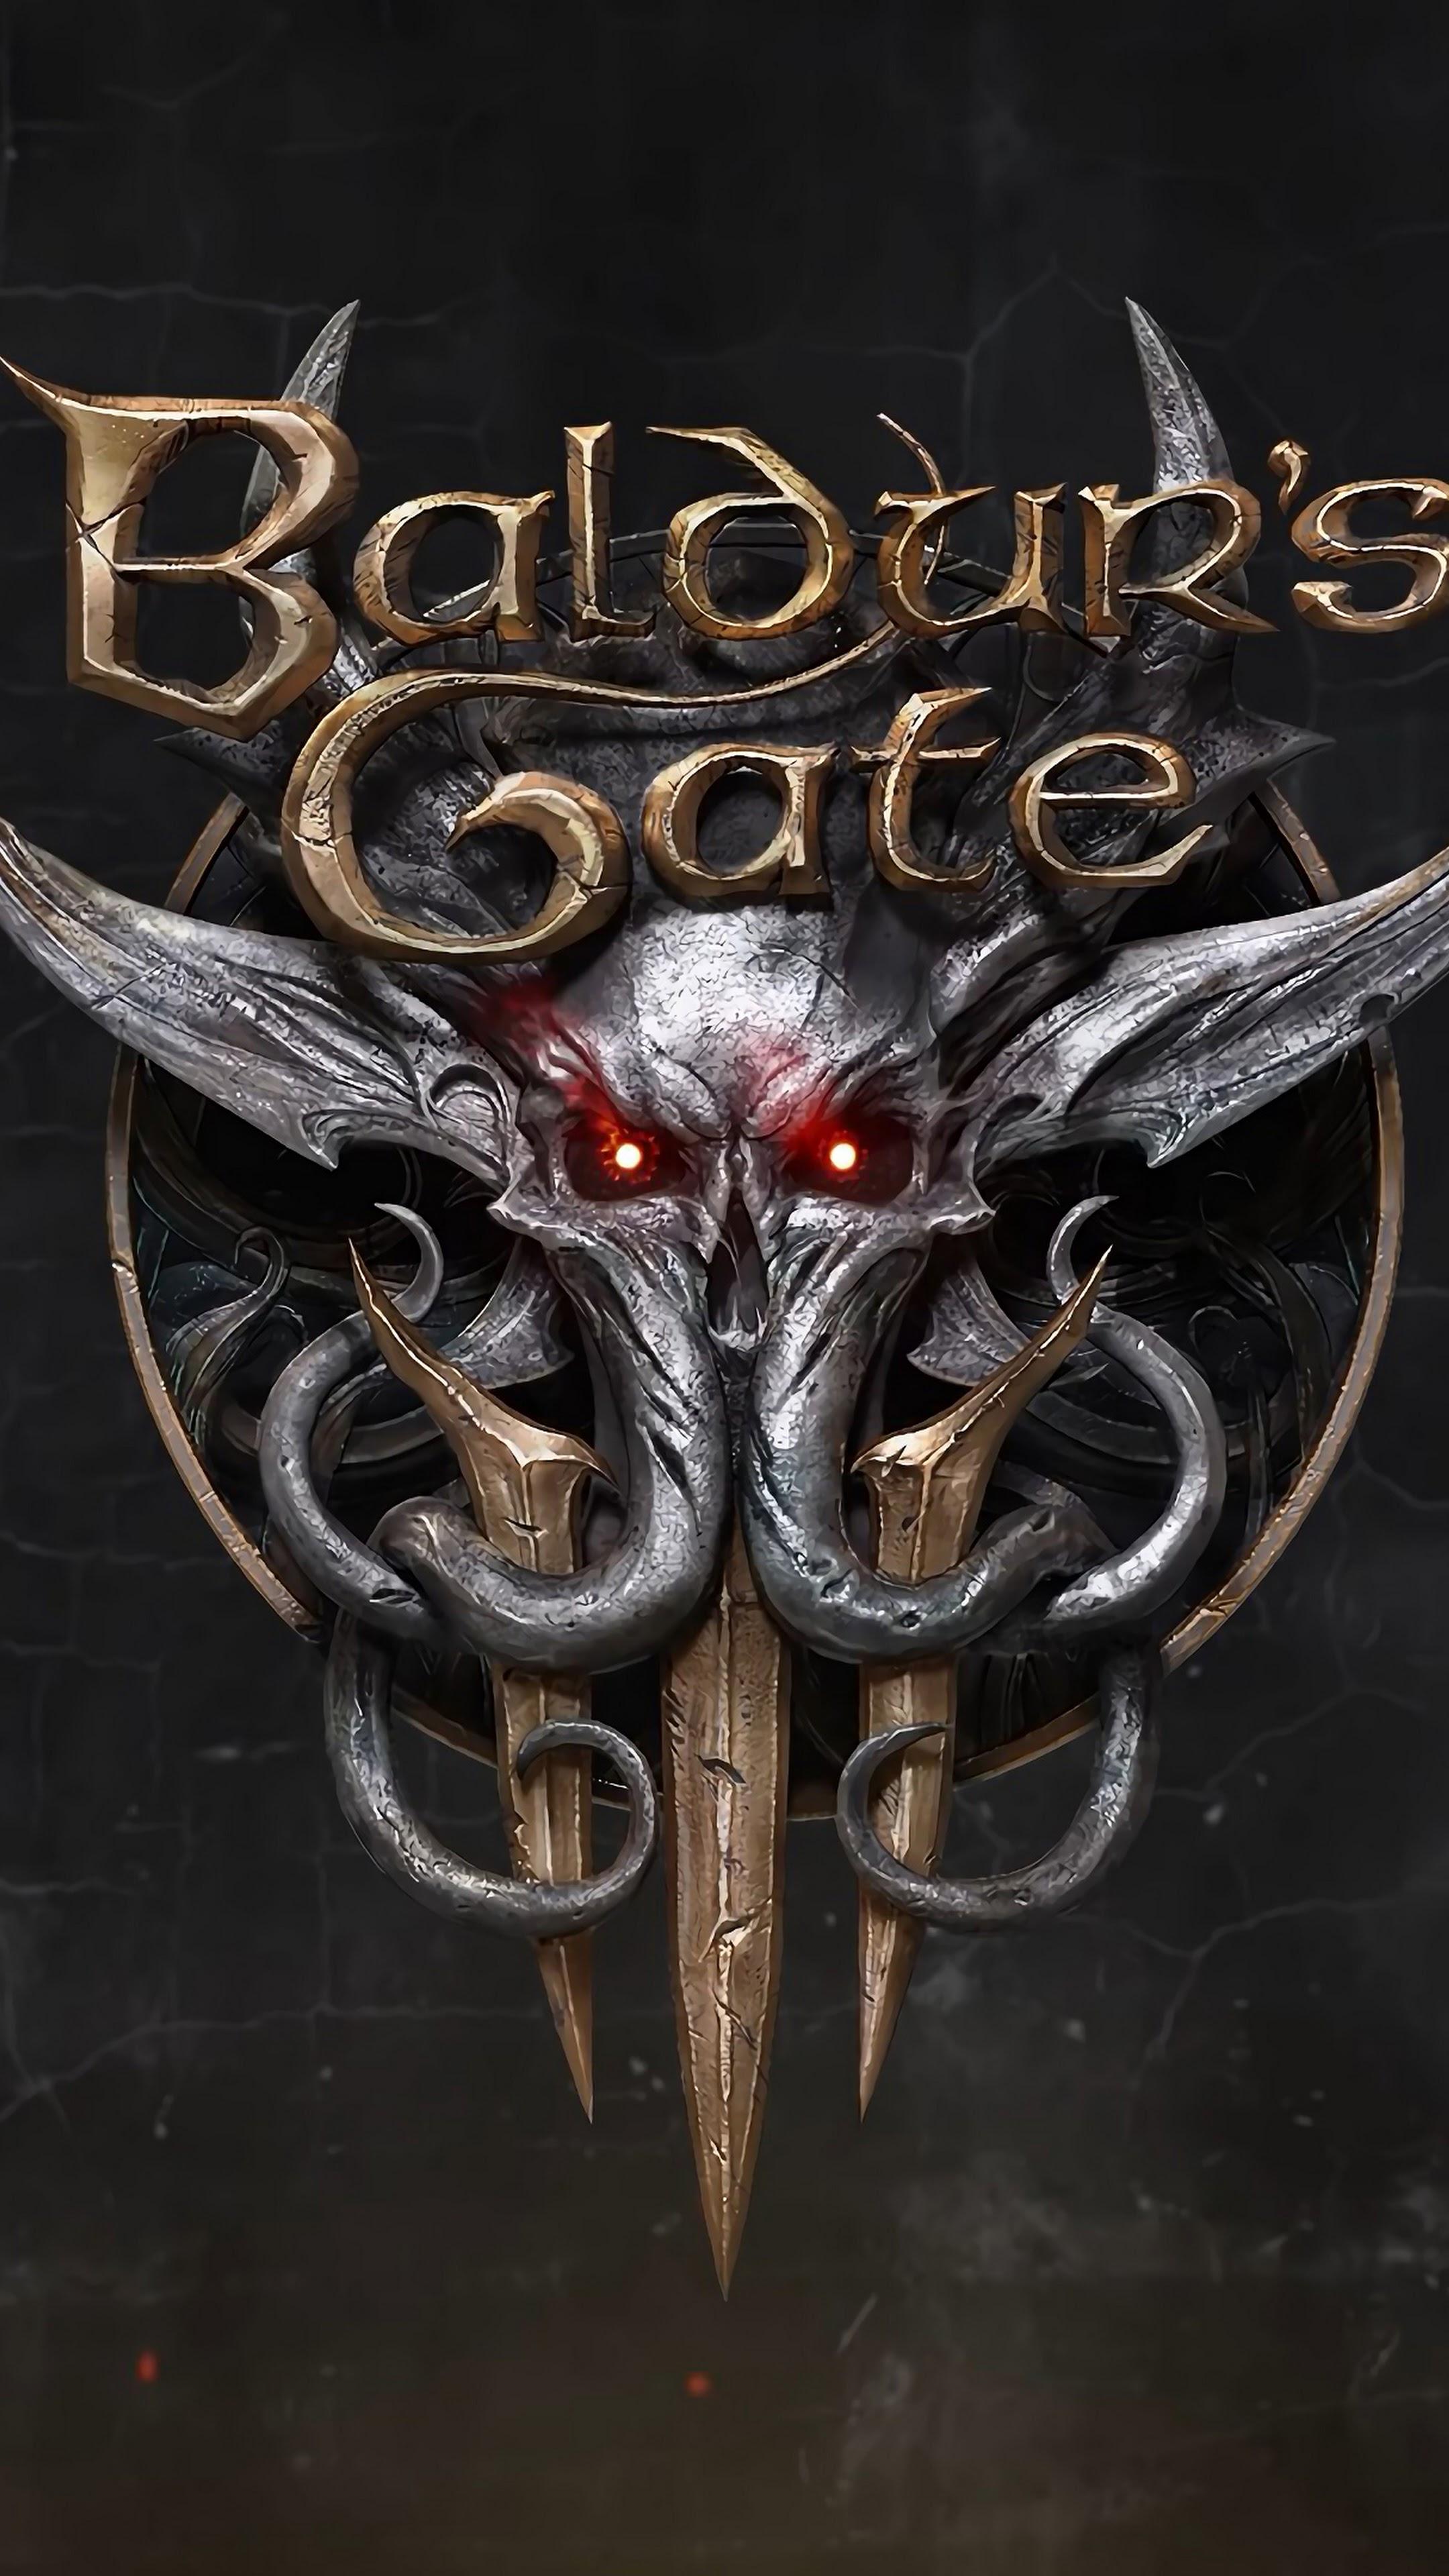 Baldur's Gate III Phone Wallpaper - Mobile Abyss